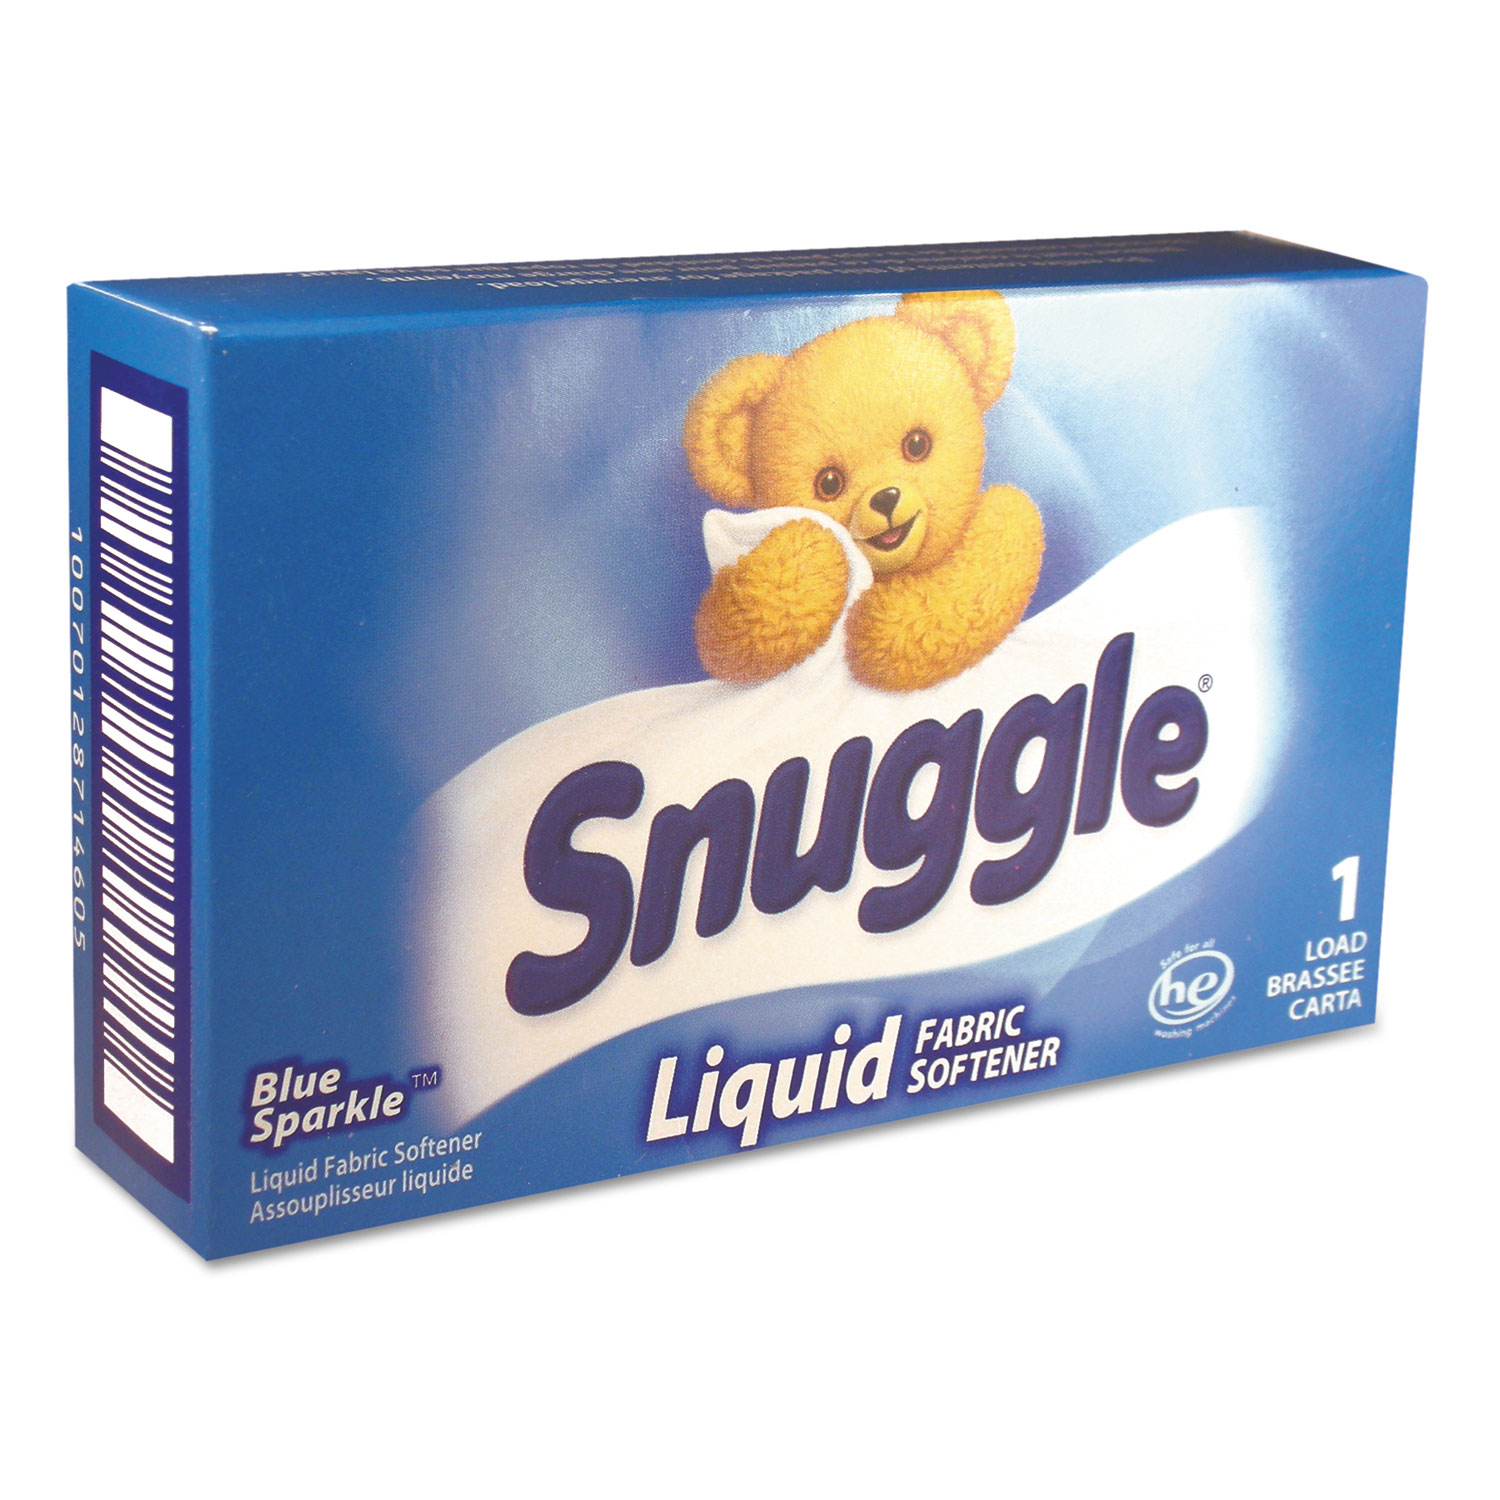  Snuggle VEN 2979996 Liquid HE Fabric Softener, Original, 1 Load Vend-Box, 100/Carton (VEN2979996) 